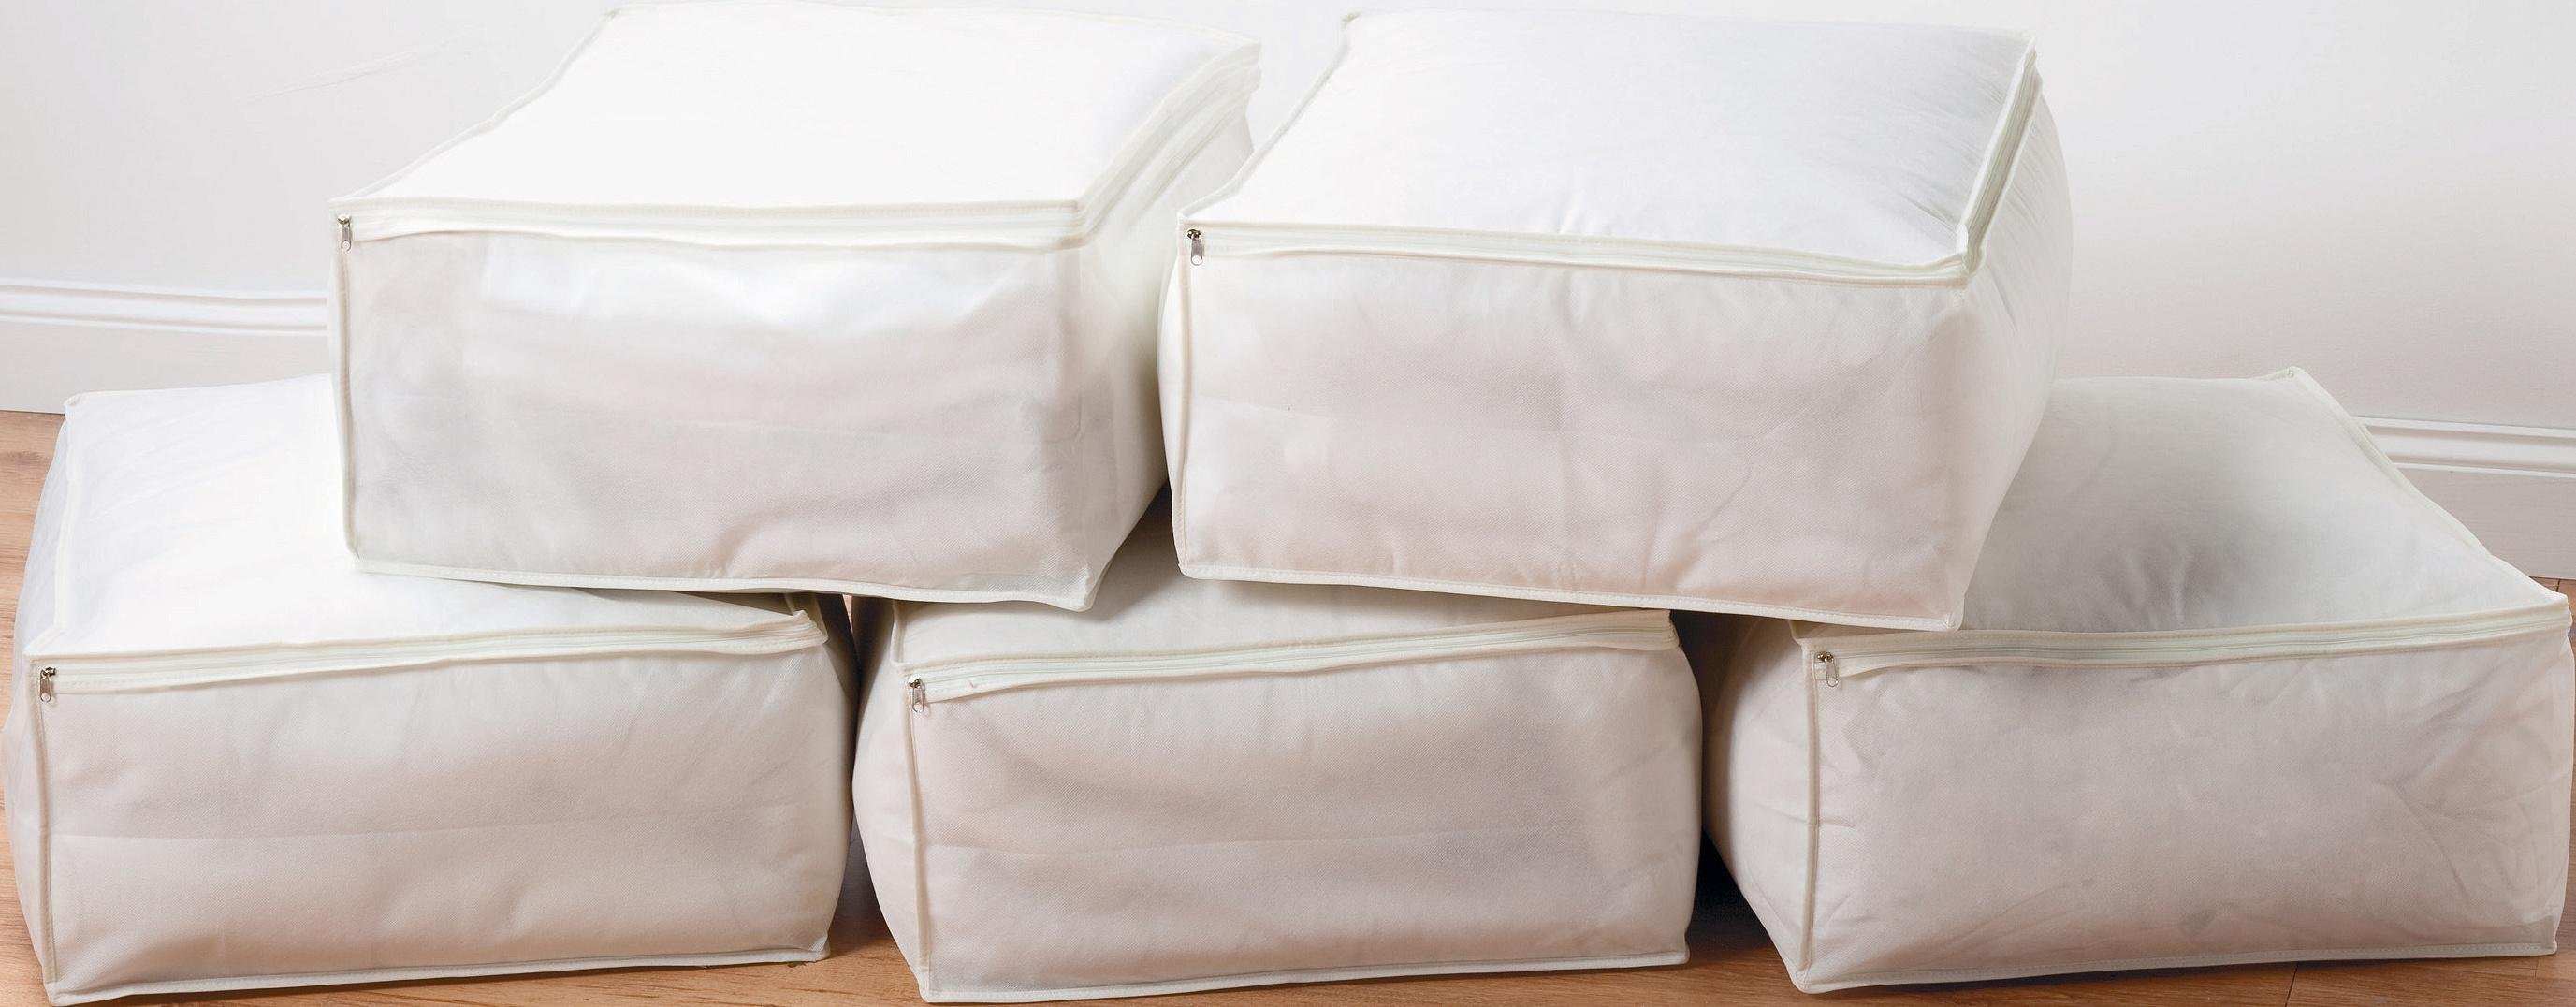 Argos Home Bumper Value Cream Blanket Storage Bags Set of 5 review